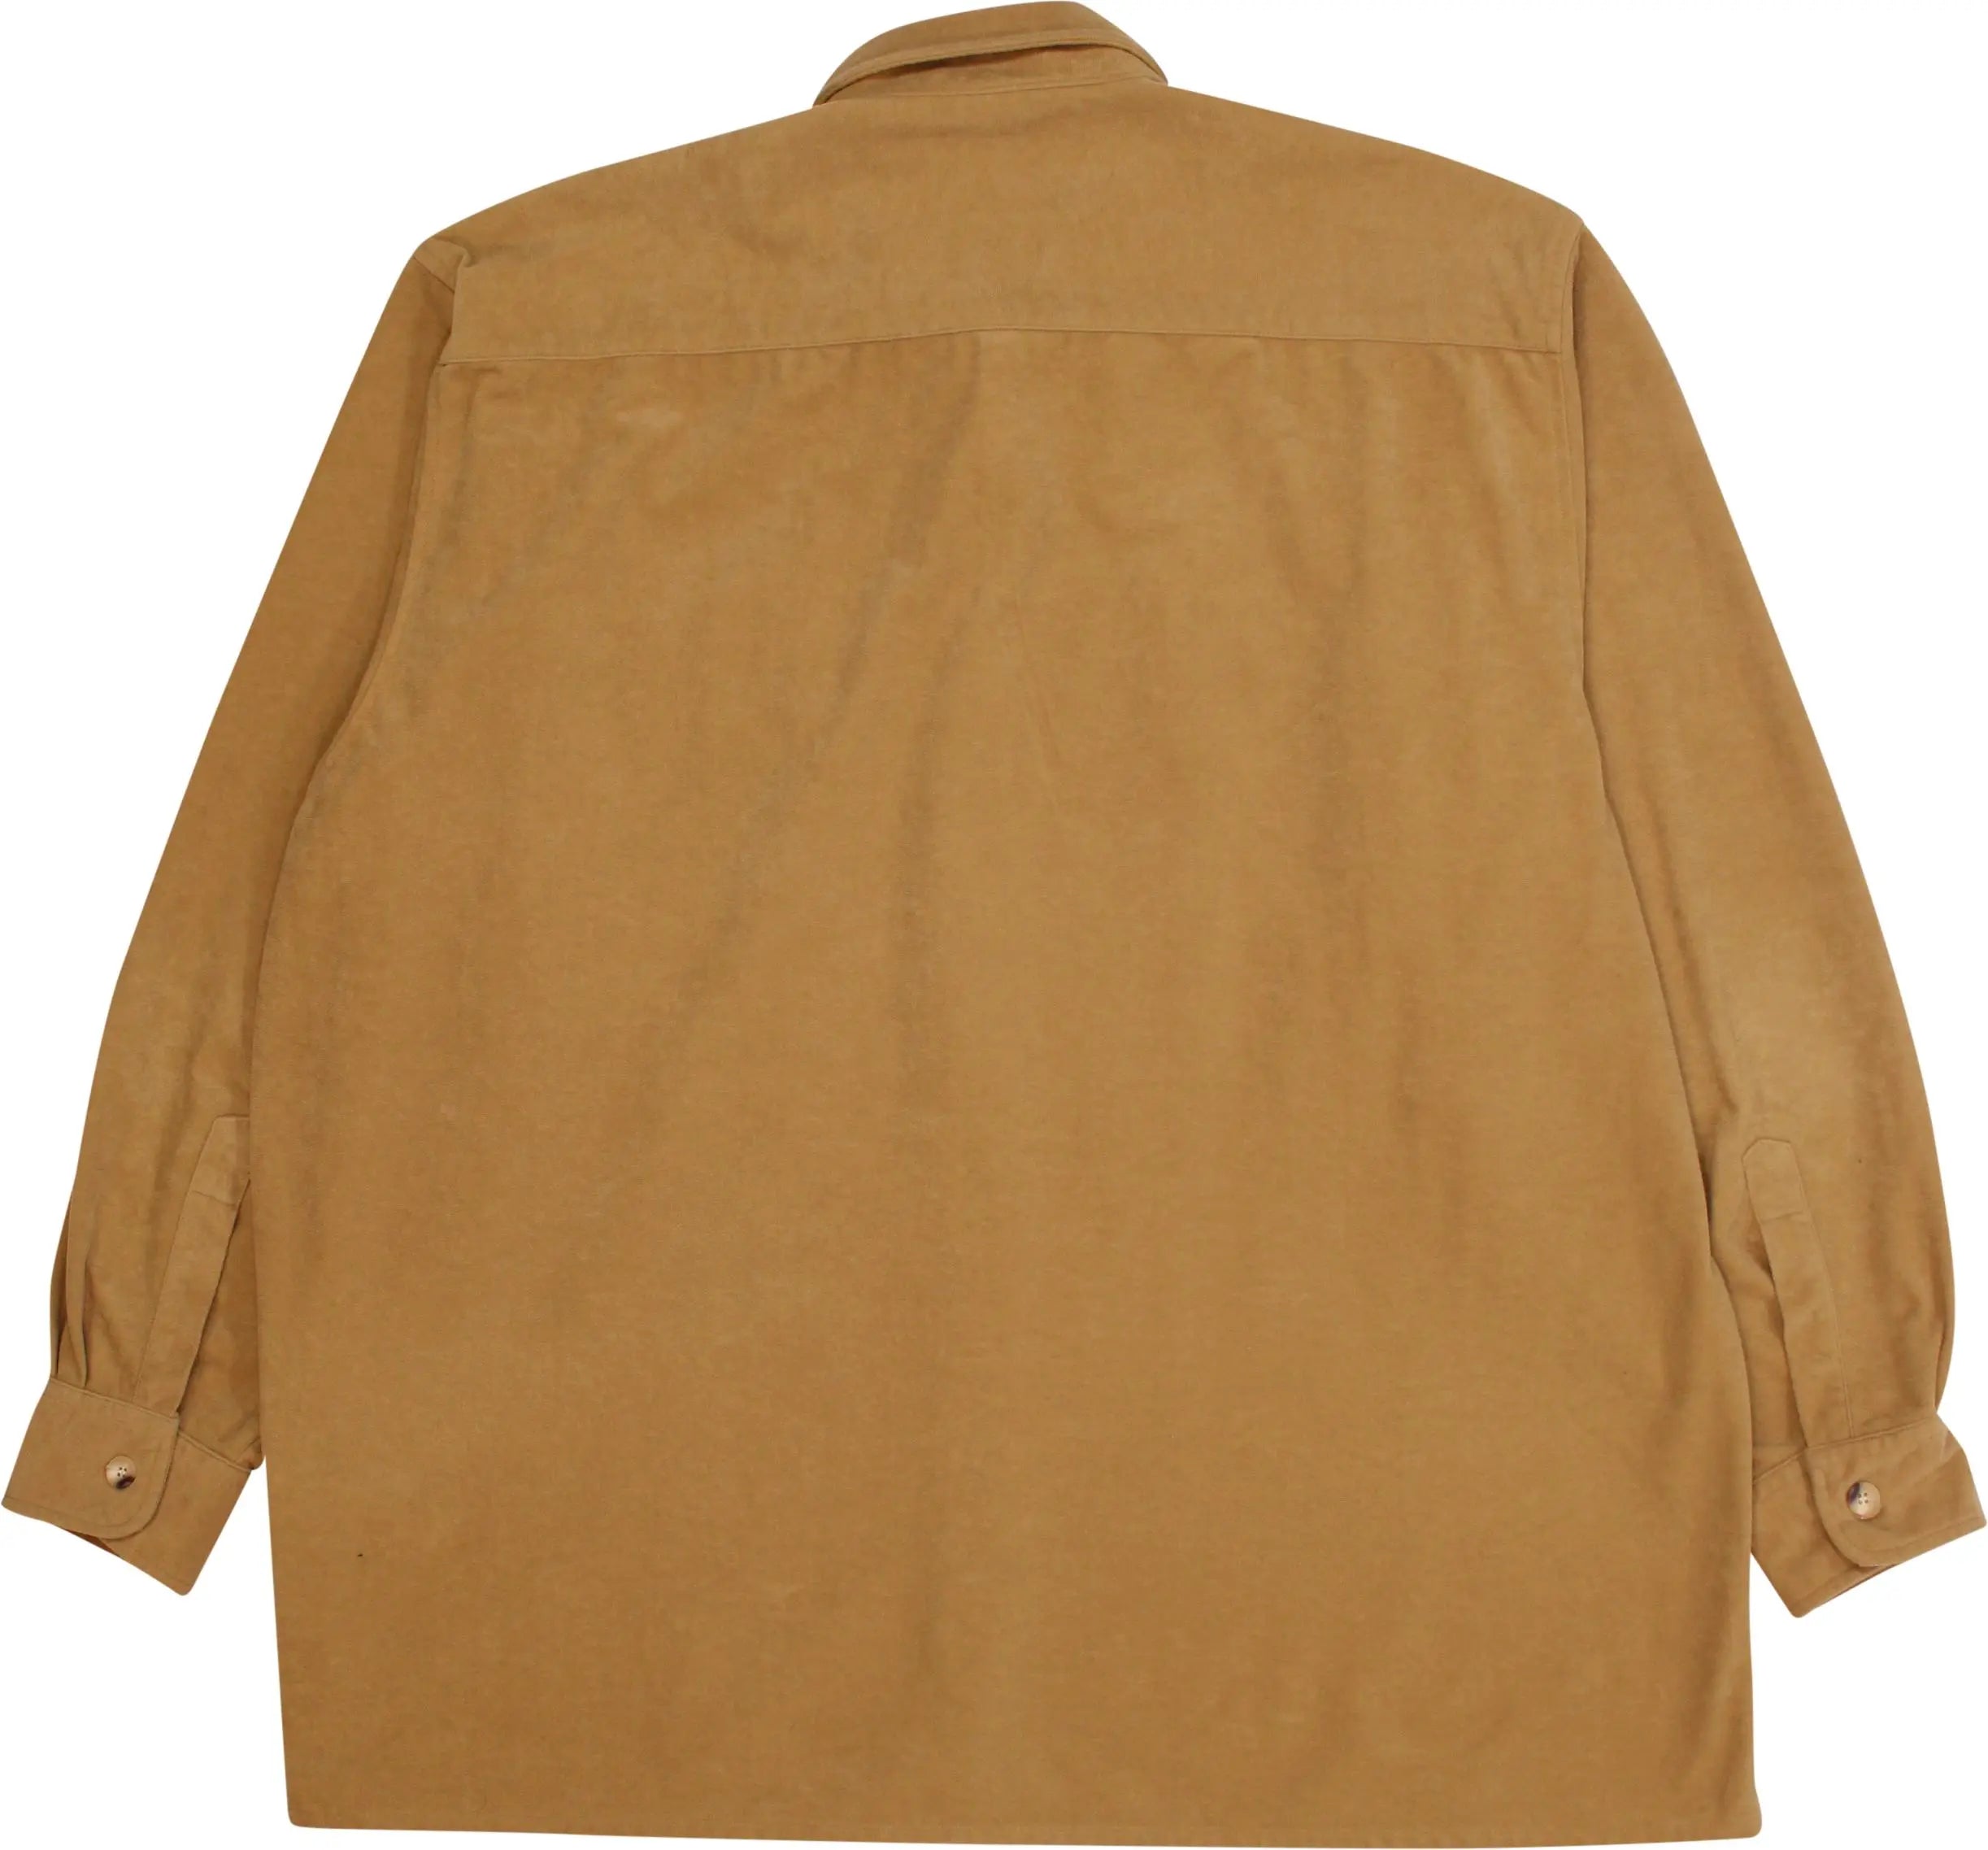 John F. Gee - Velvet Shirt- ThriftTale.com - Vintage and second handclothing